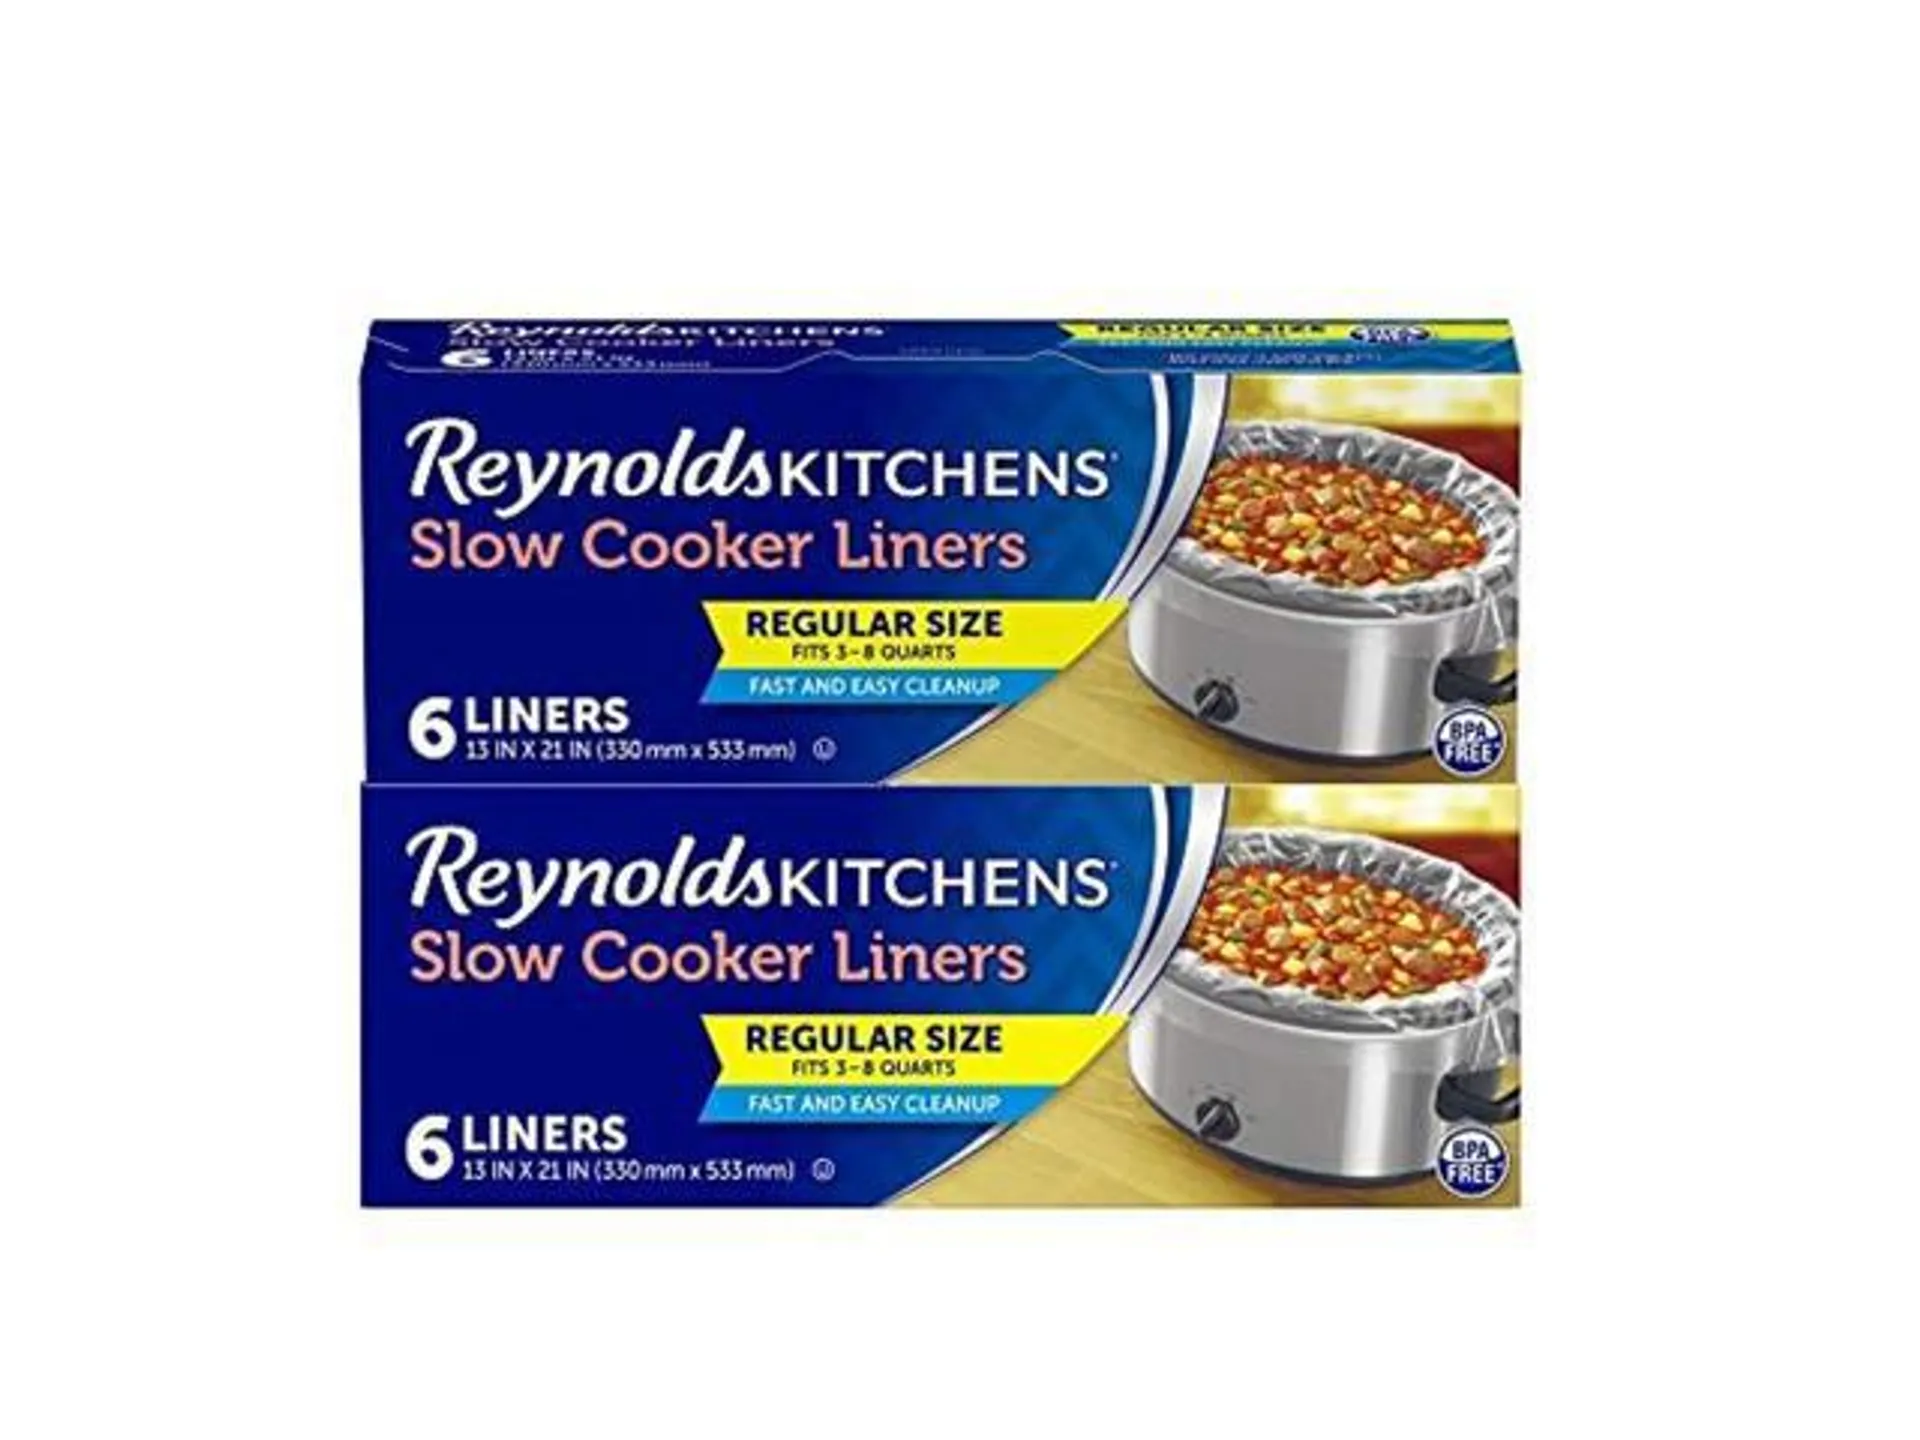 reynolds kitchens slow cooker liners, regular (fits 3-8 quarts), 6 count (pack of 2), 12 total